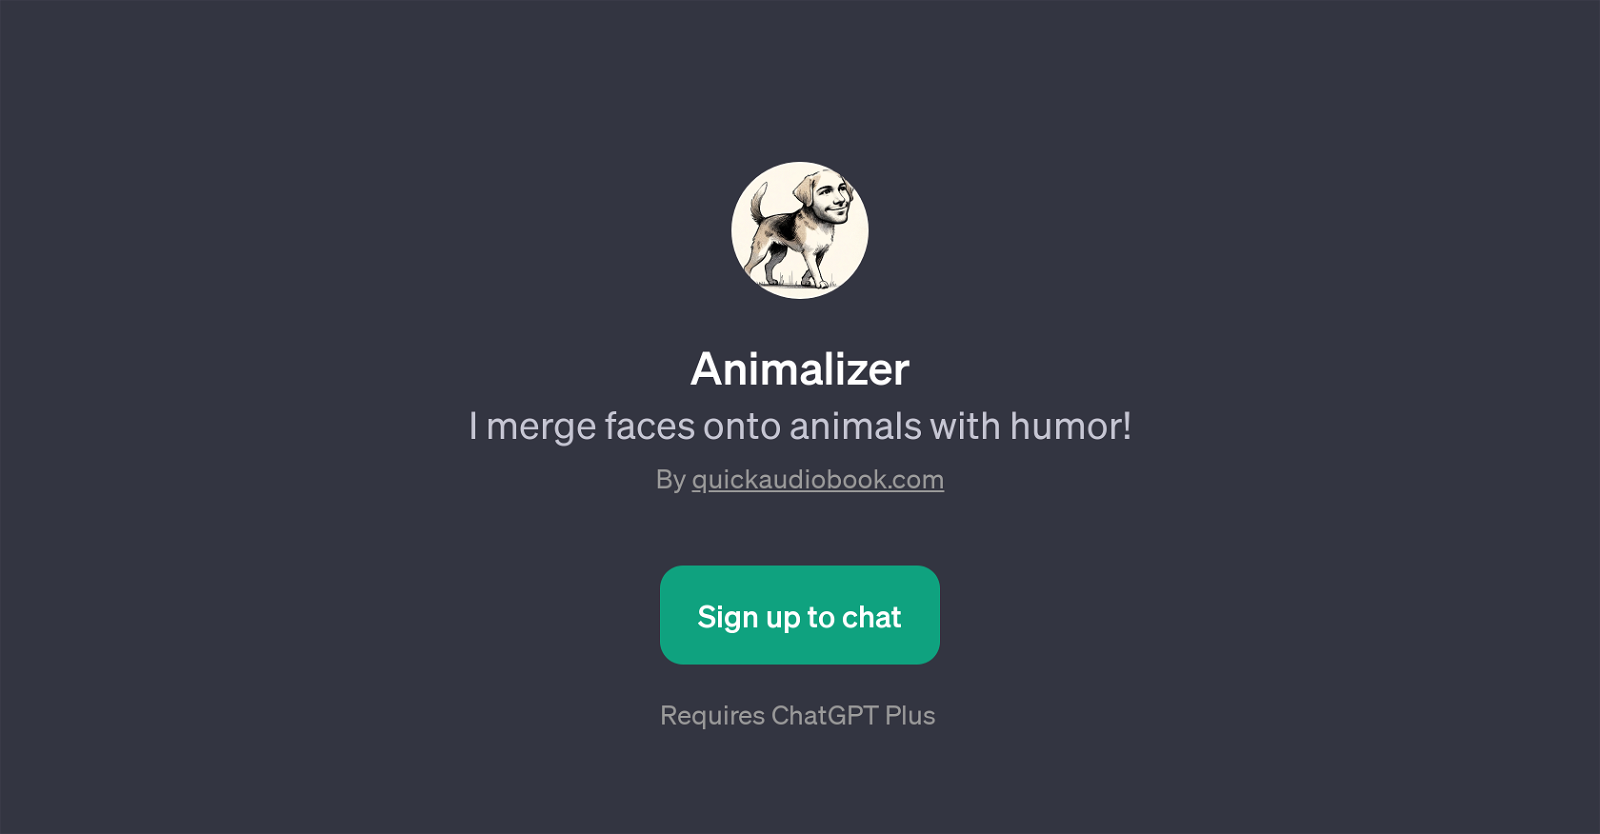 Animalizer website